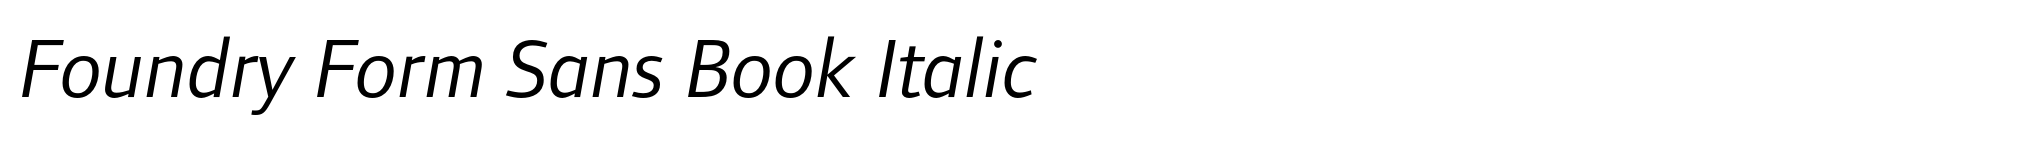 Foundry Form Sans Book Italic image